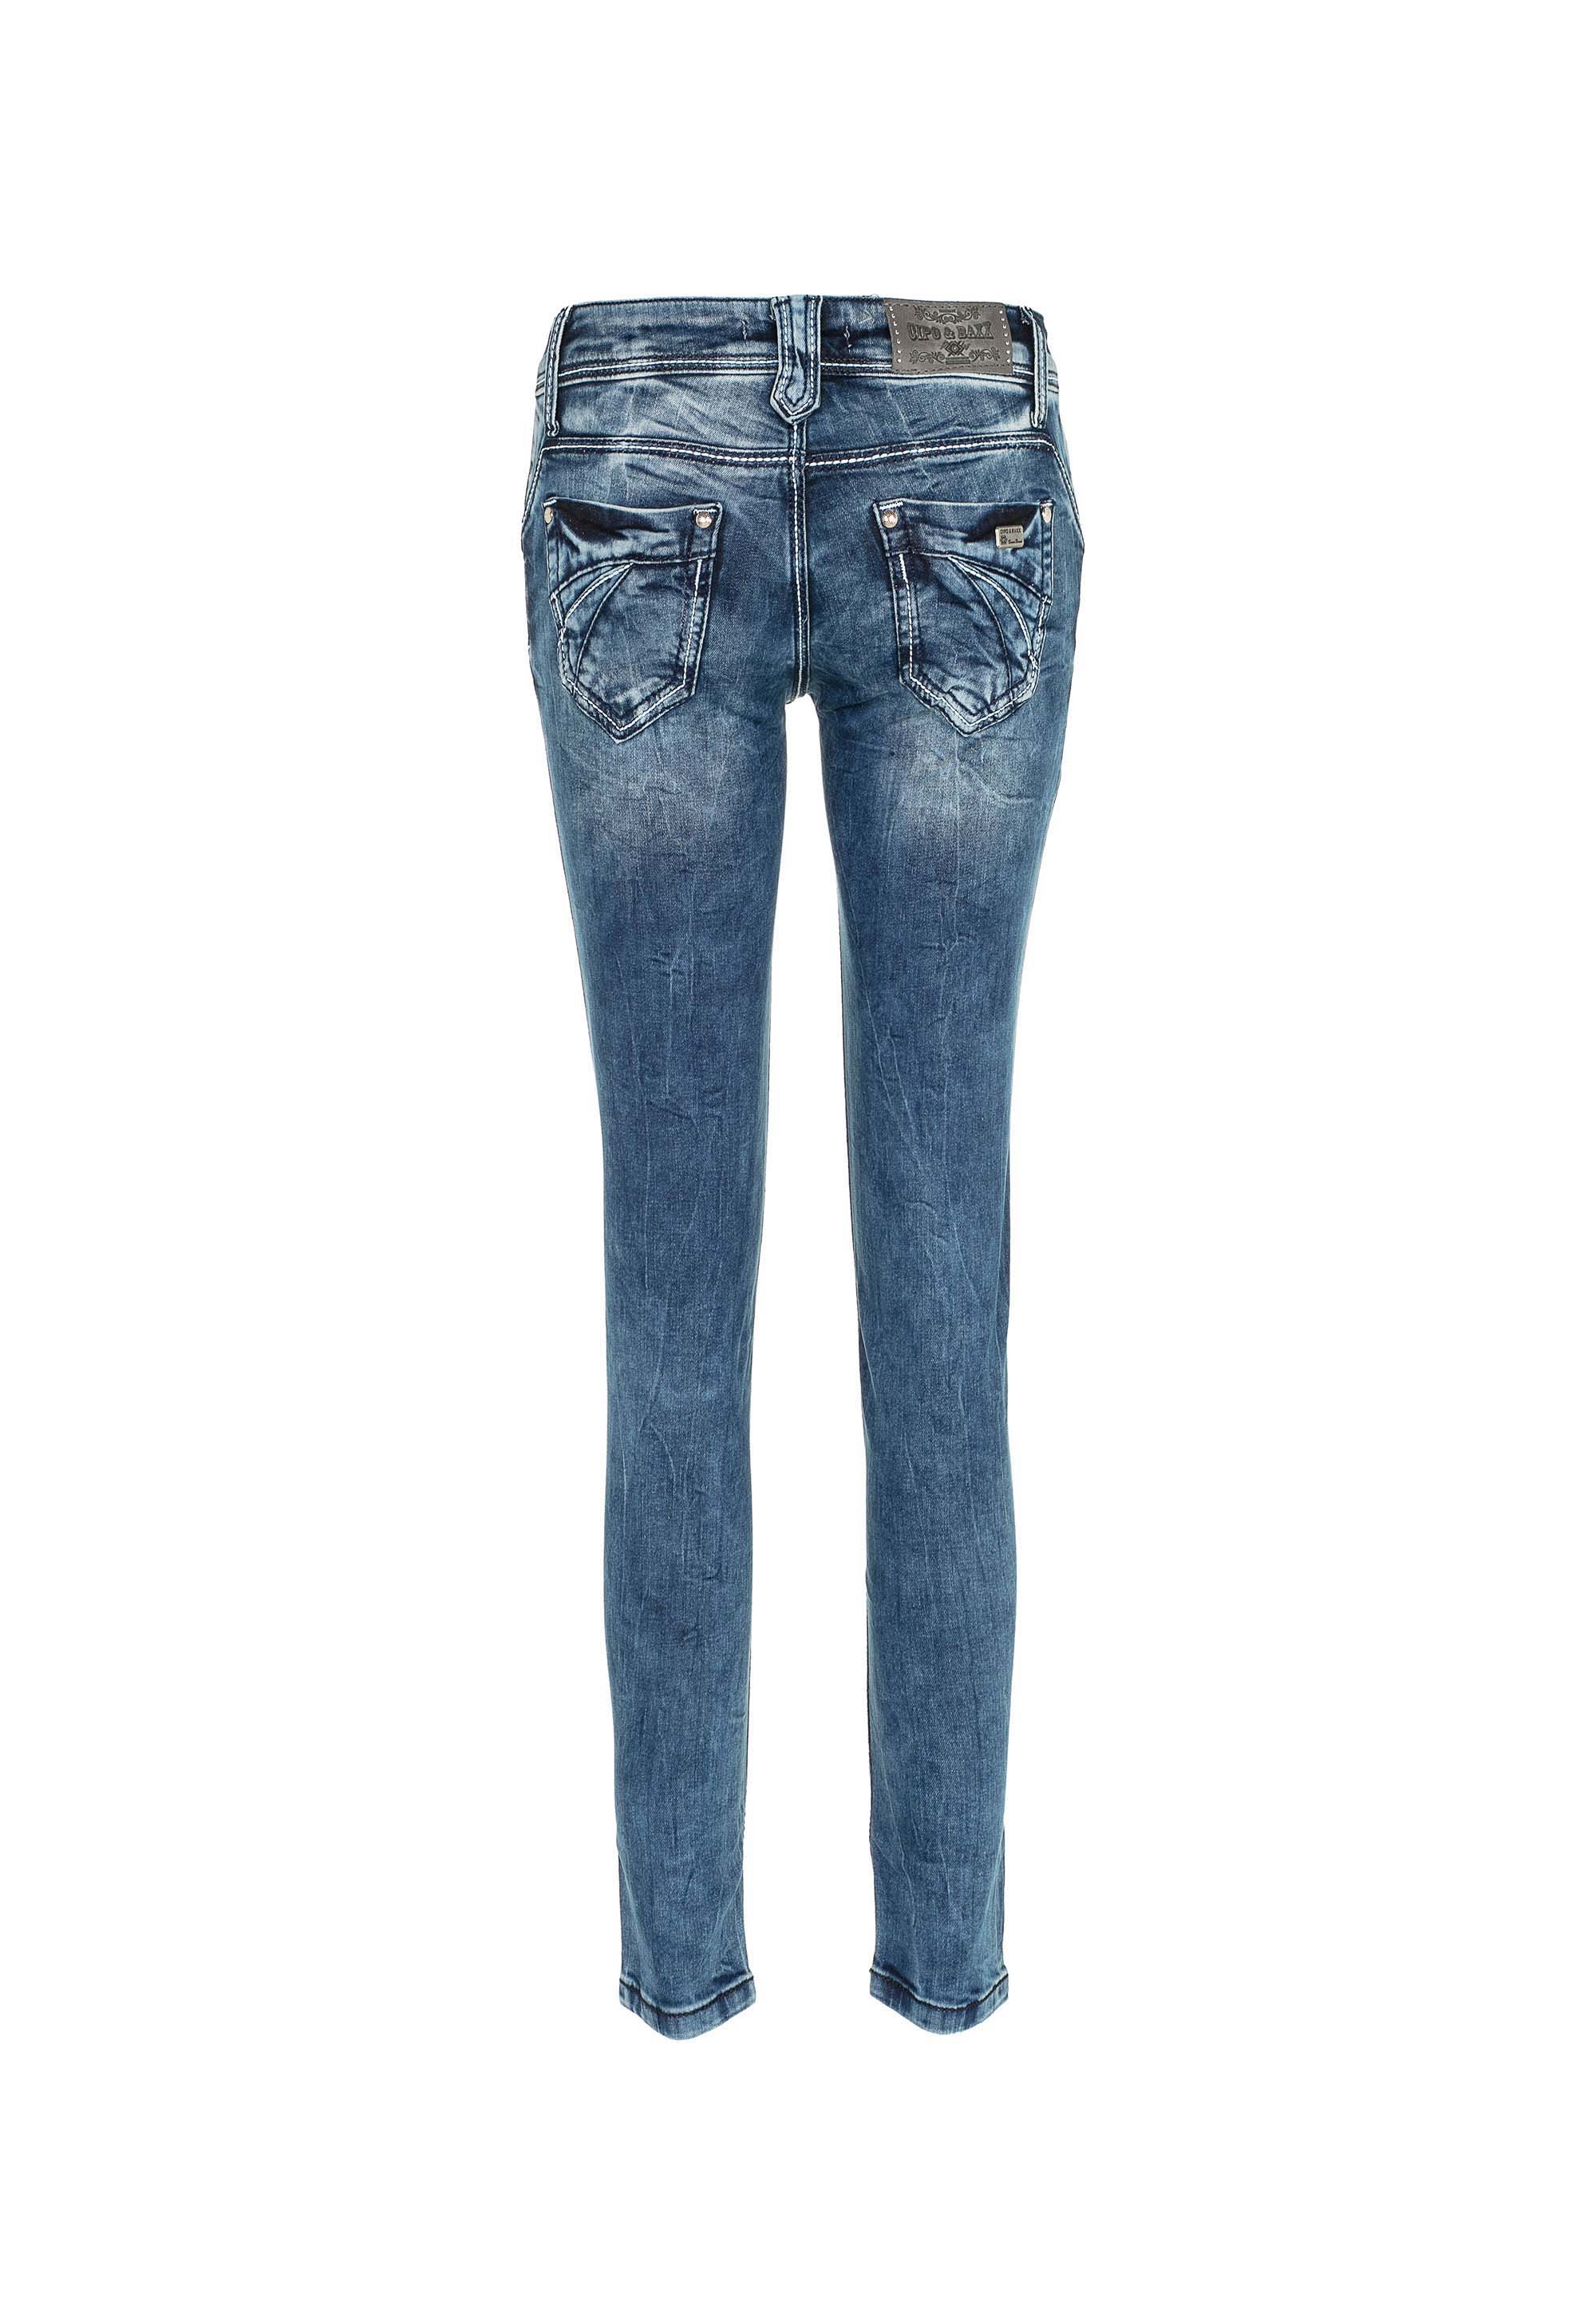 CIPO & BAXX Jeans WD286 in Blau 